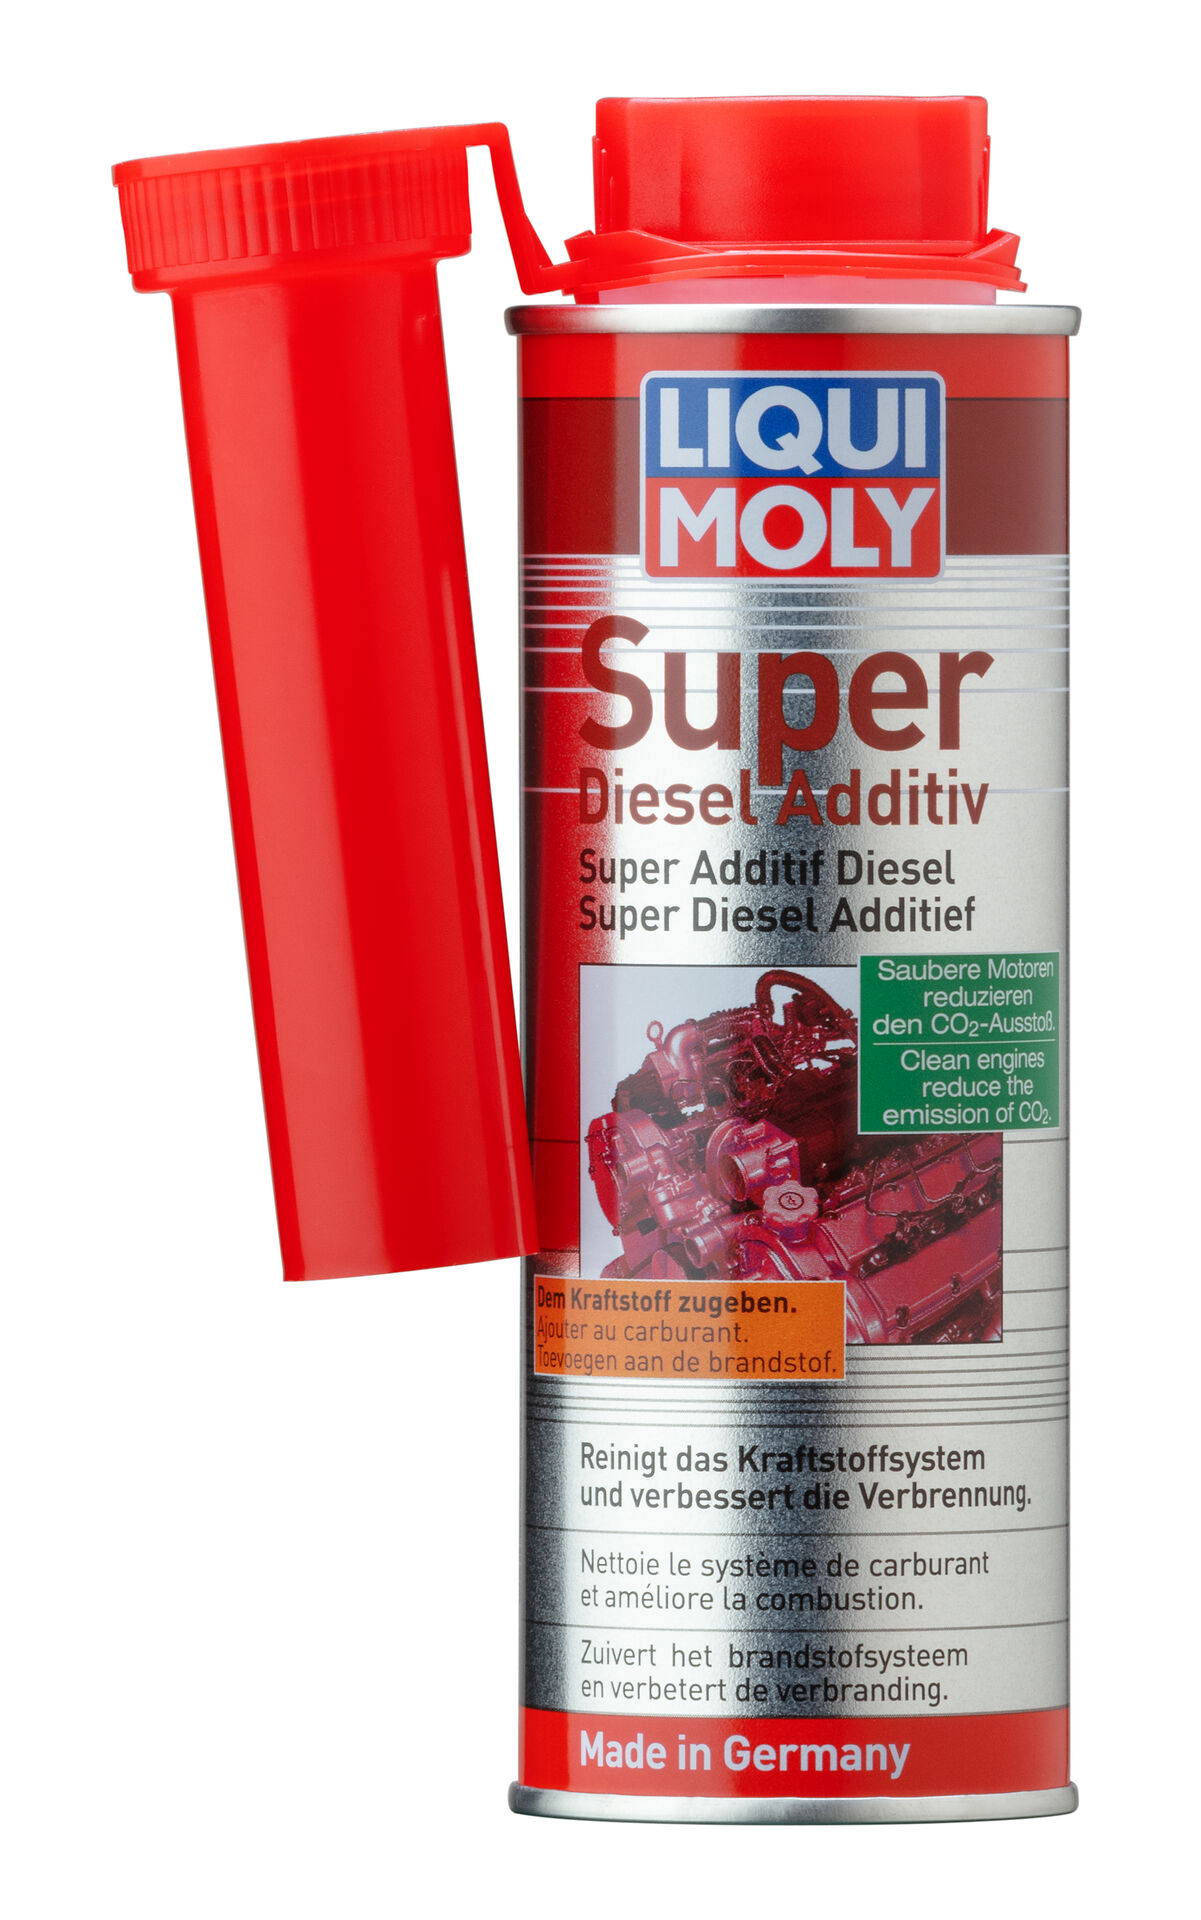  Liqui Moly 5120 1x250 ml Dose Super Diesel Additiv